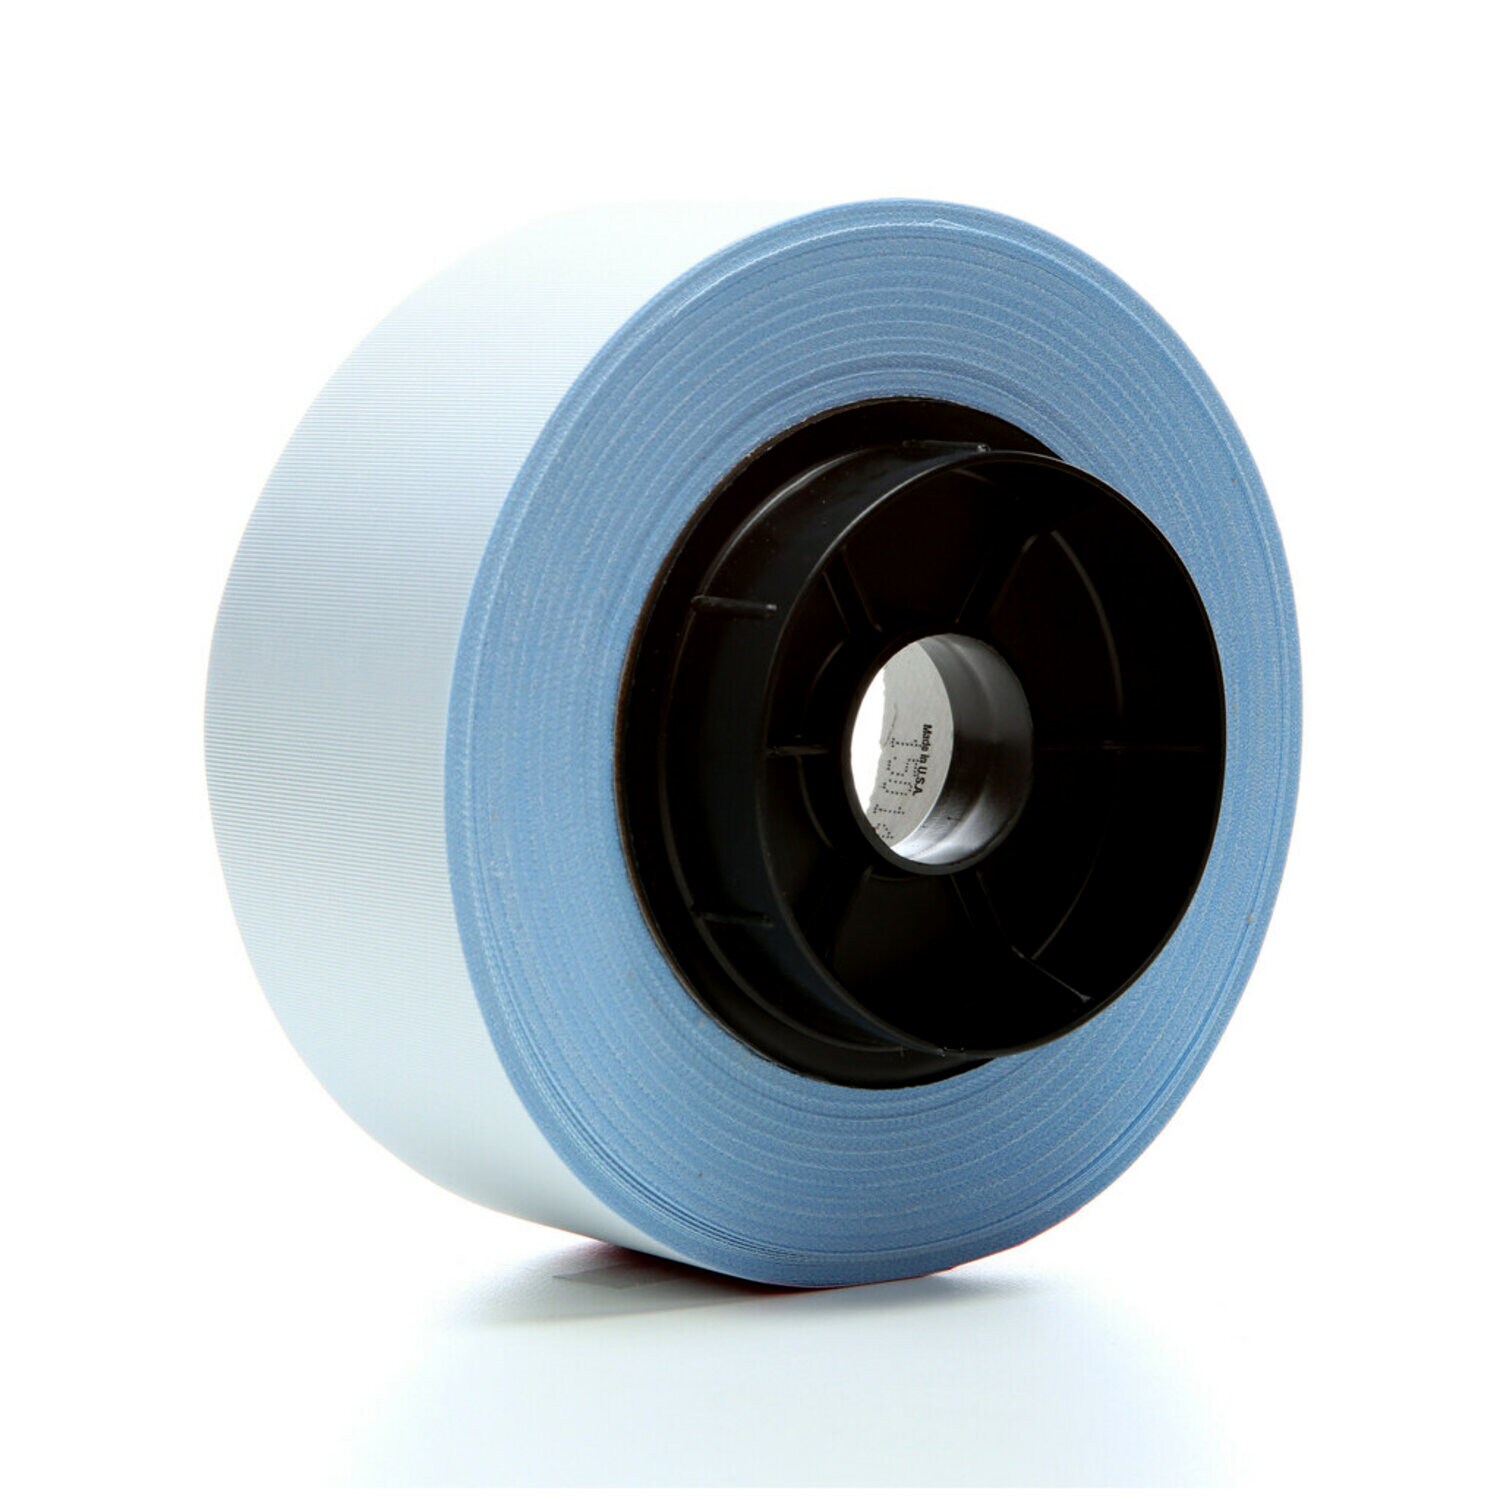 7100003056 - 3M Glass Cloth Tape 398FR, White, 2 in x 36 yd, 24 rolls per case